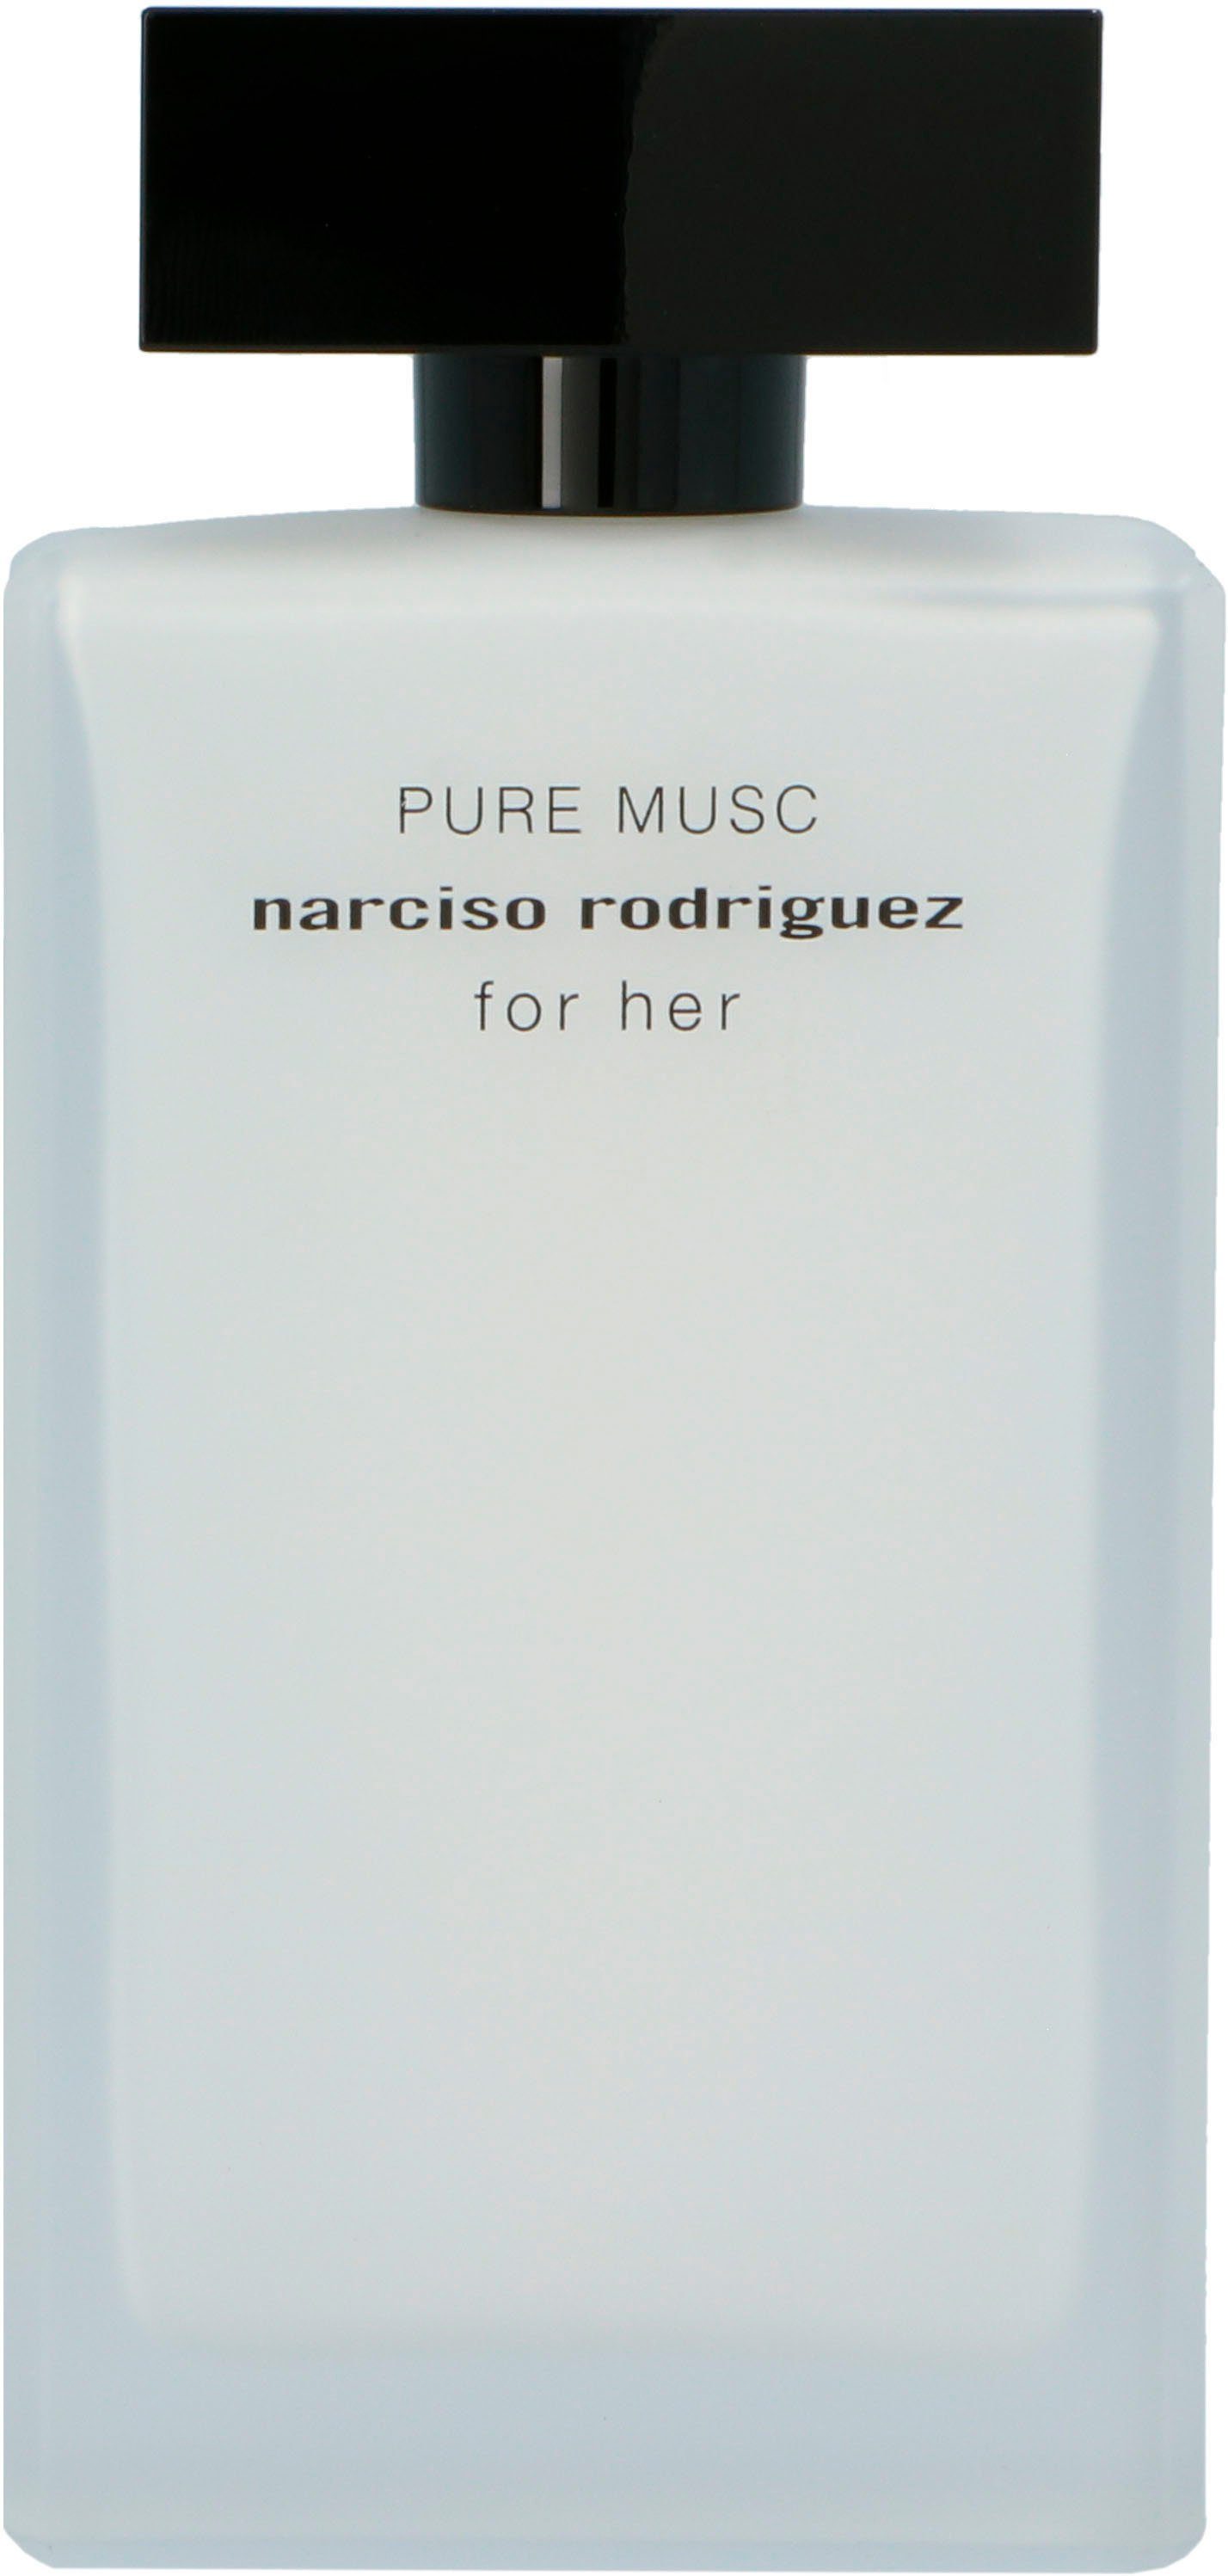 Pure de for Musc narciso Parfum Rodriguez rodriguez Narciso Eau Her